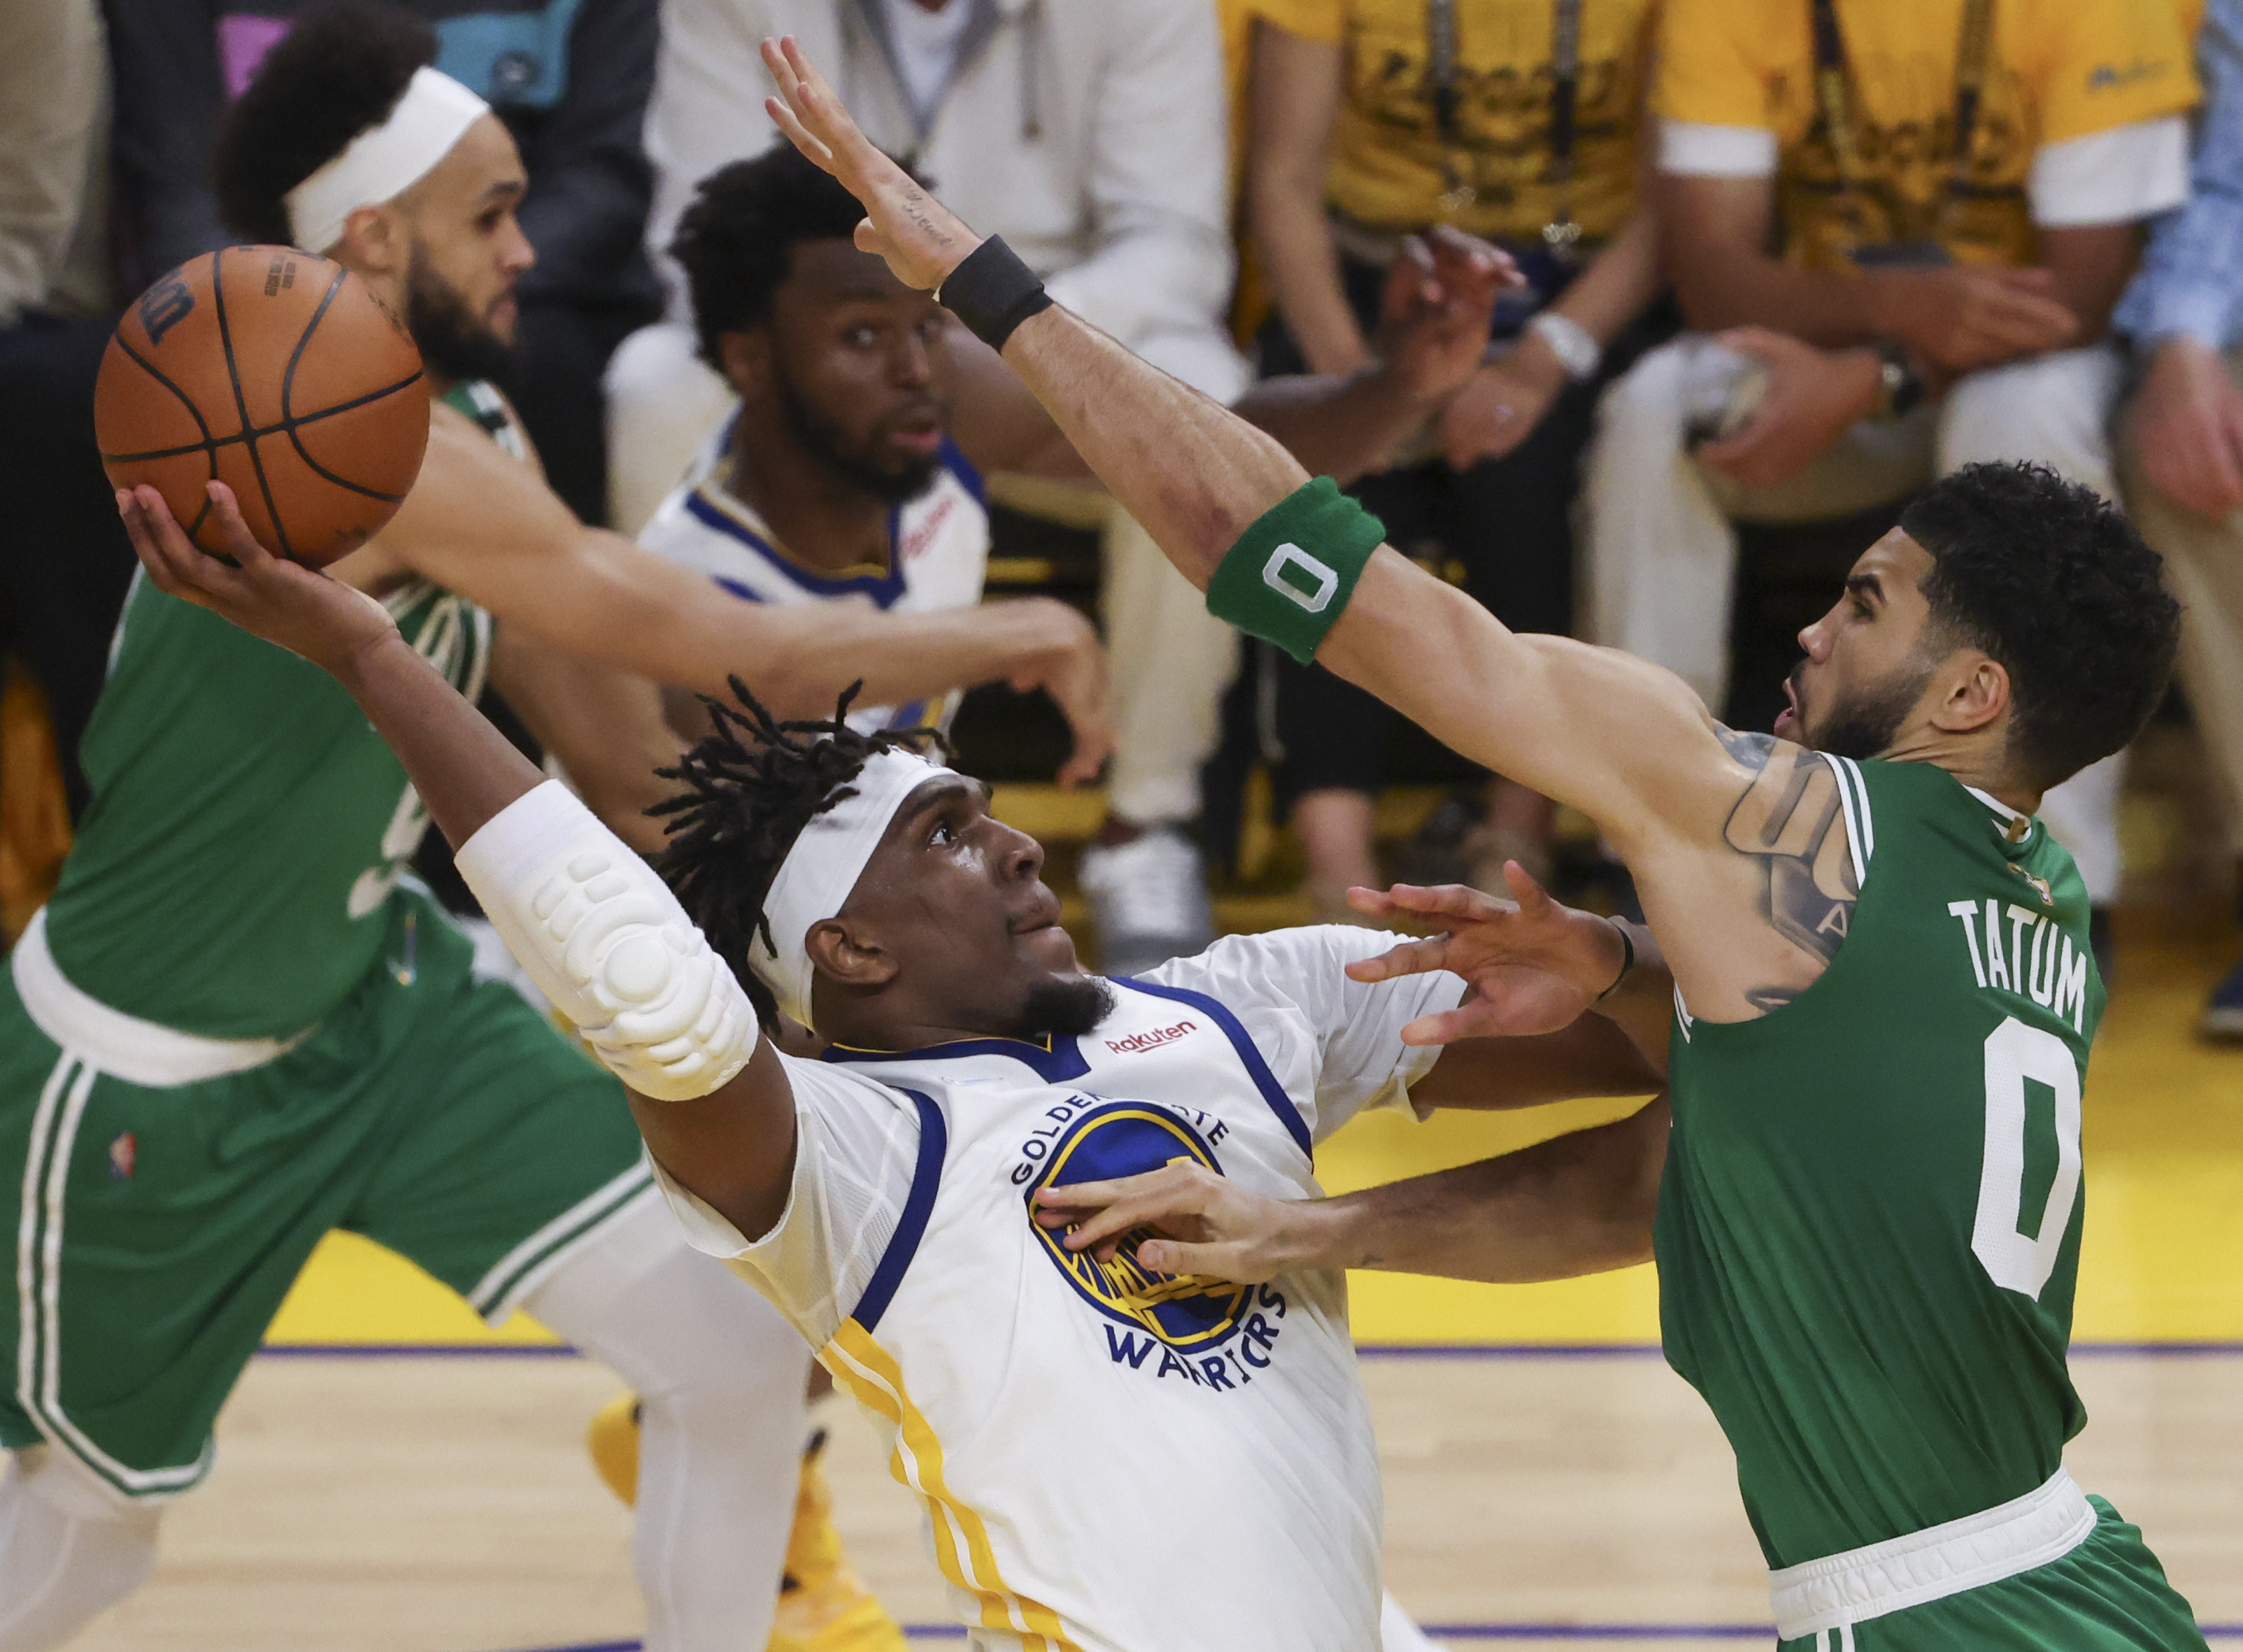 Celtics' Derrick White Joins Michael Jordan in NBA History With